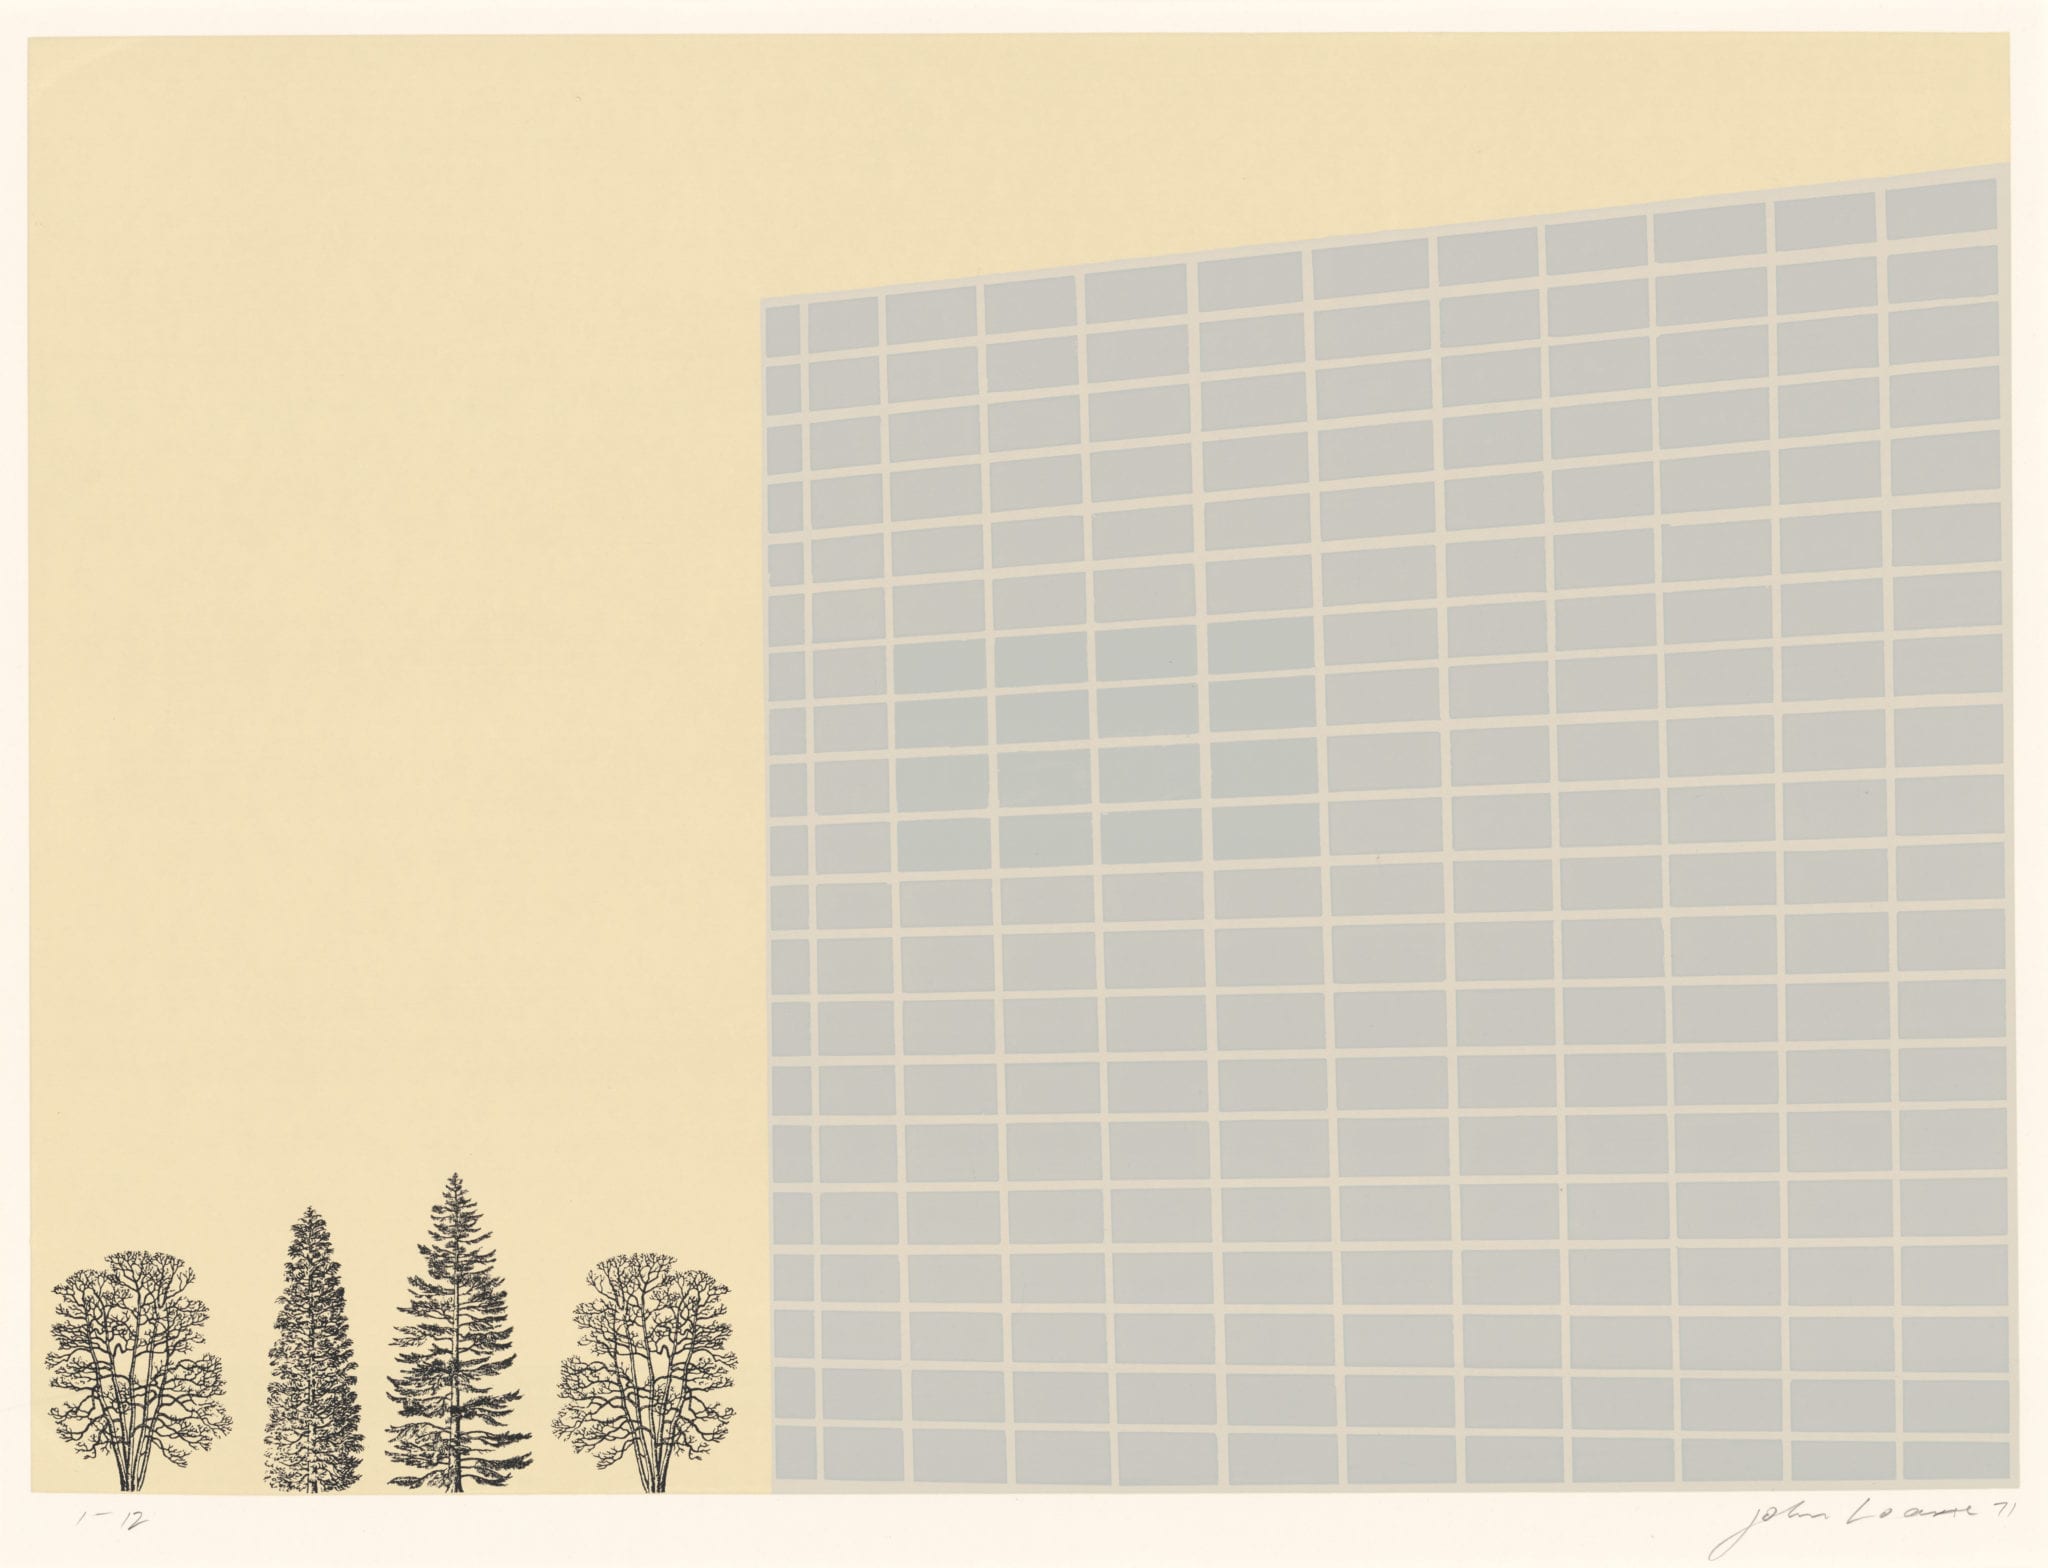 John Loane, Untitled (Architectural study), 1971, Silkscreen and Letraset, 45 x 64 cm. Latrobe Regional Gallery.